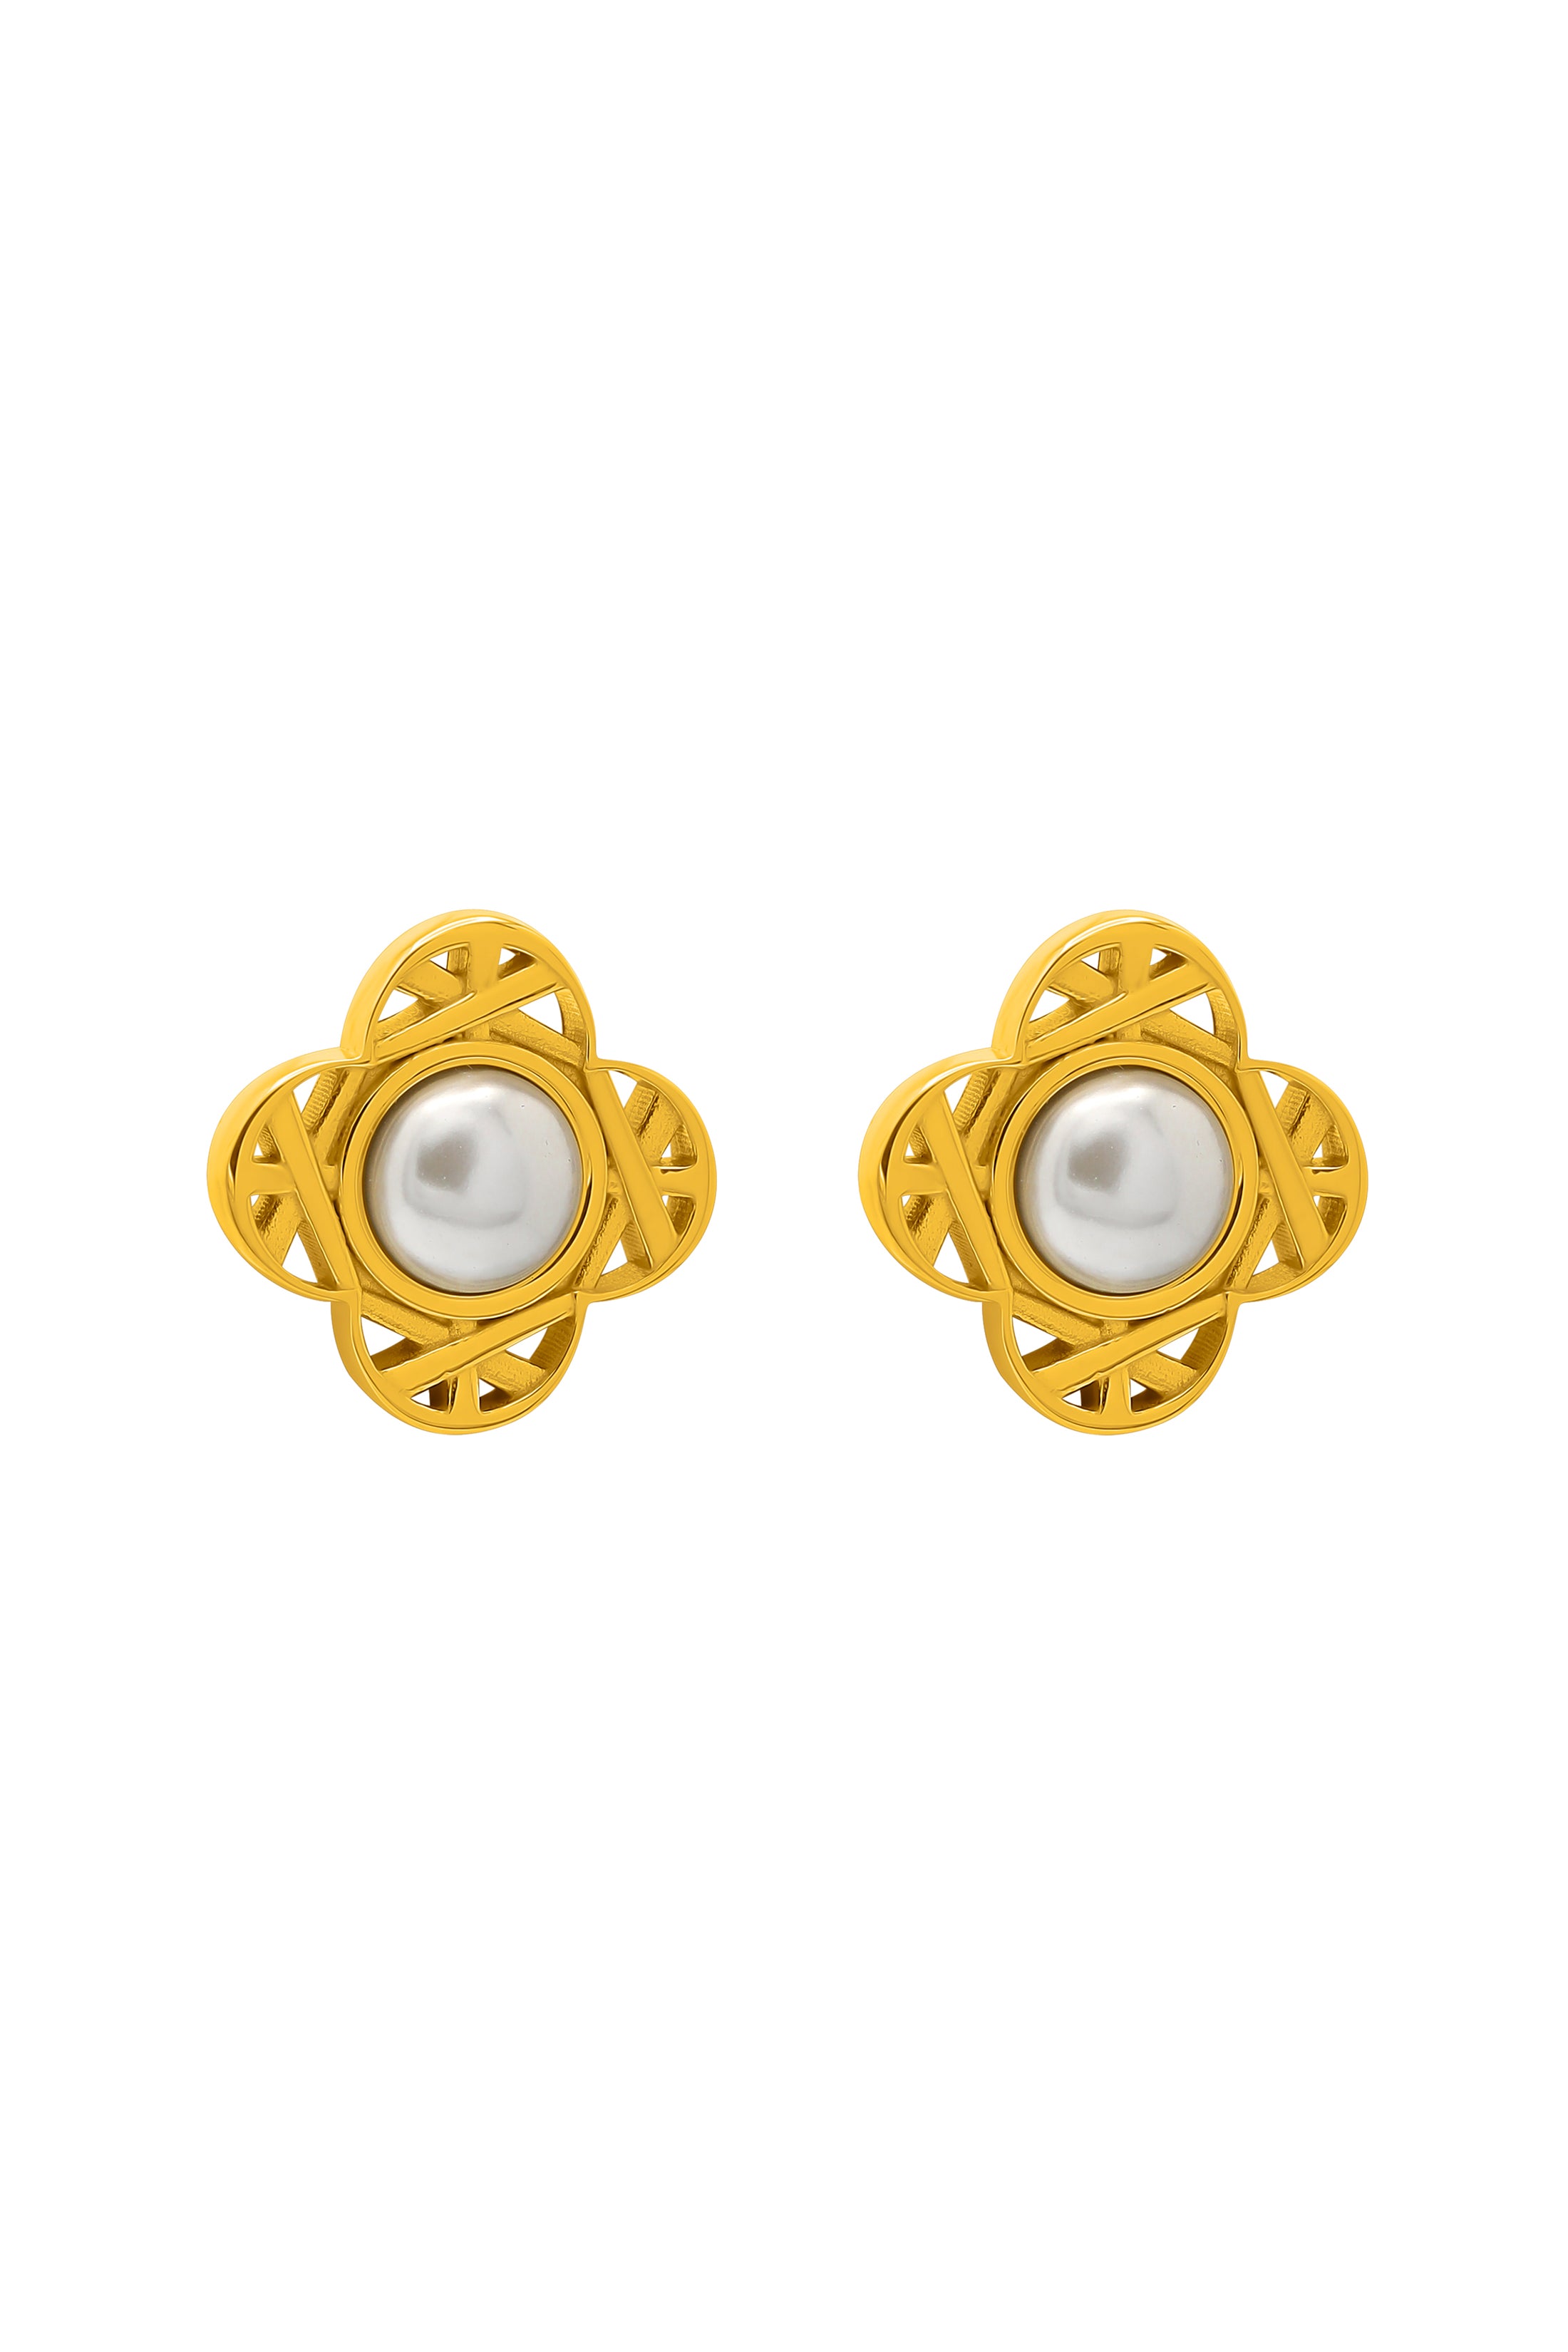 Marsha’s Pearl Abstract Stud Earring Set